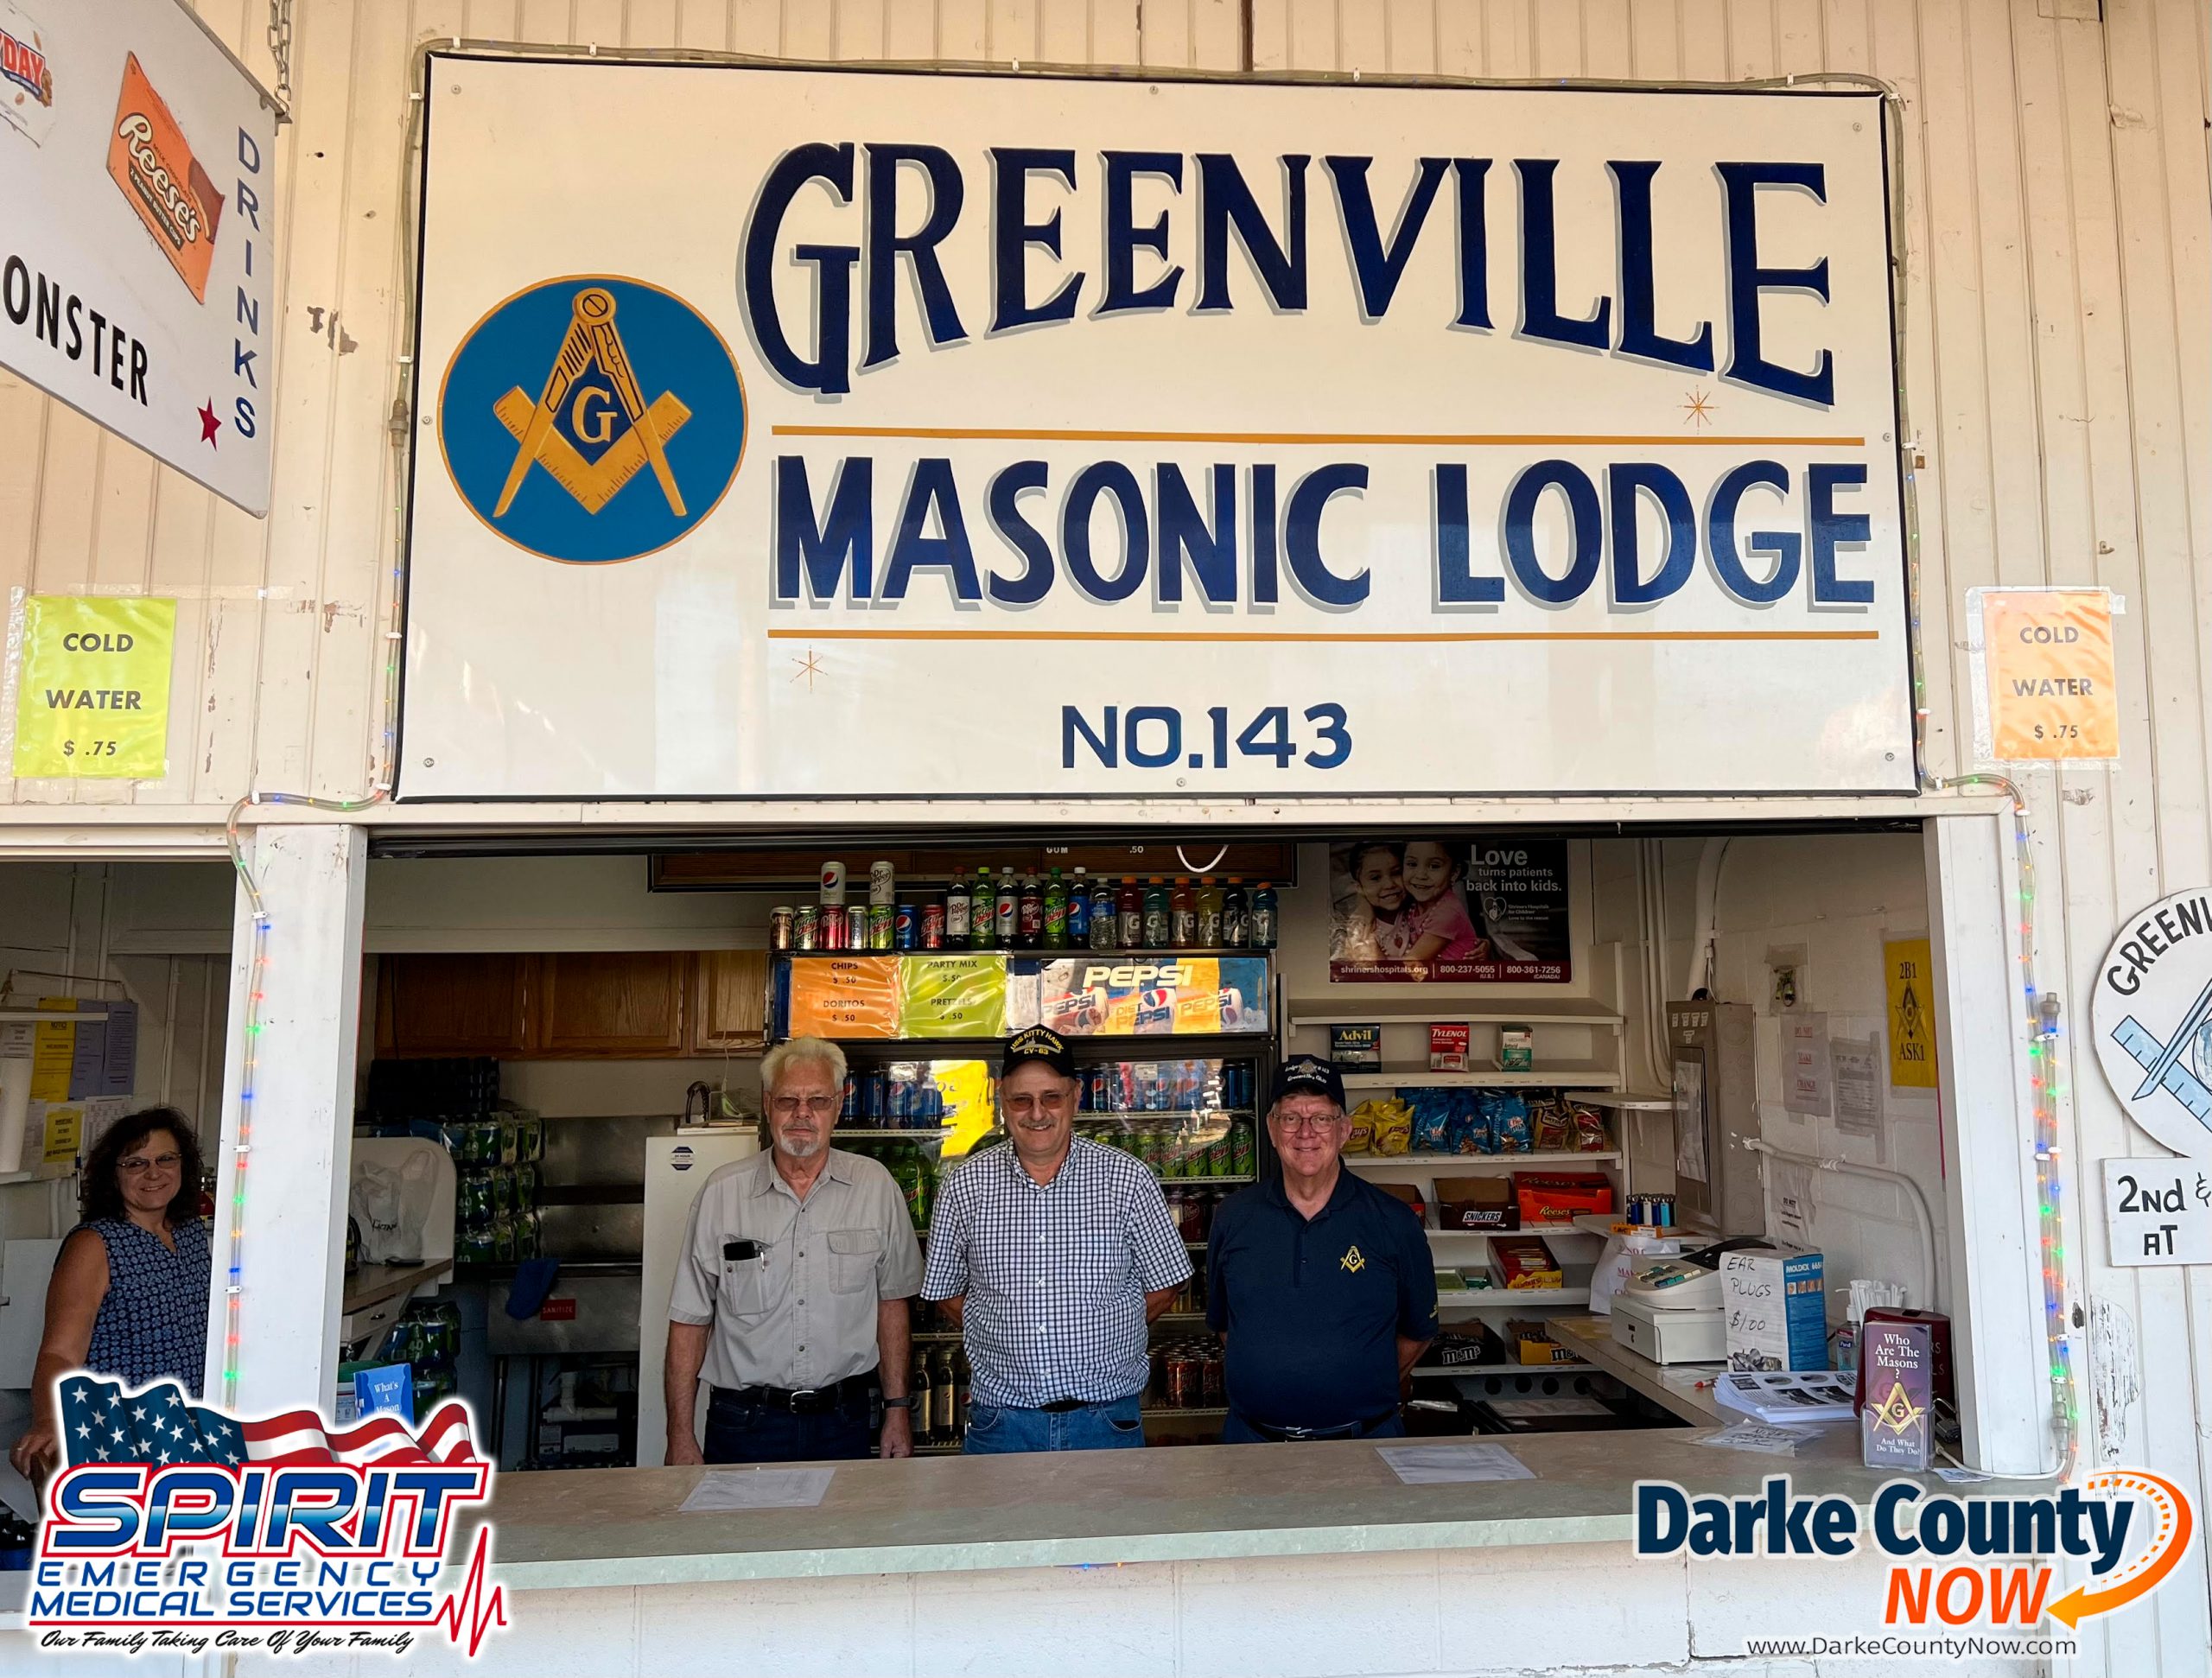 Ohio/U.S. - Greenville Masonic Lodge 143, under grandstand since 1972